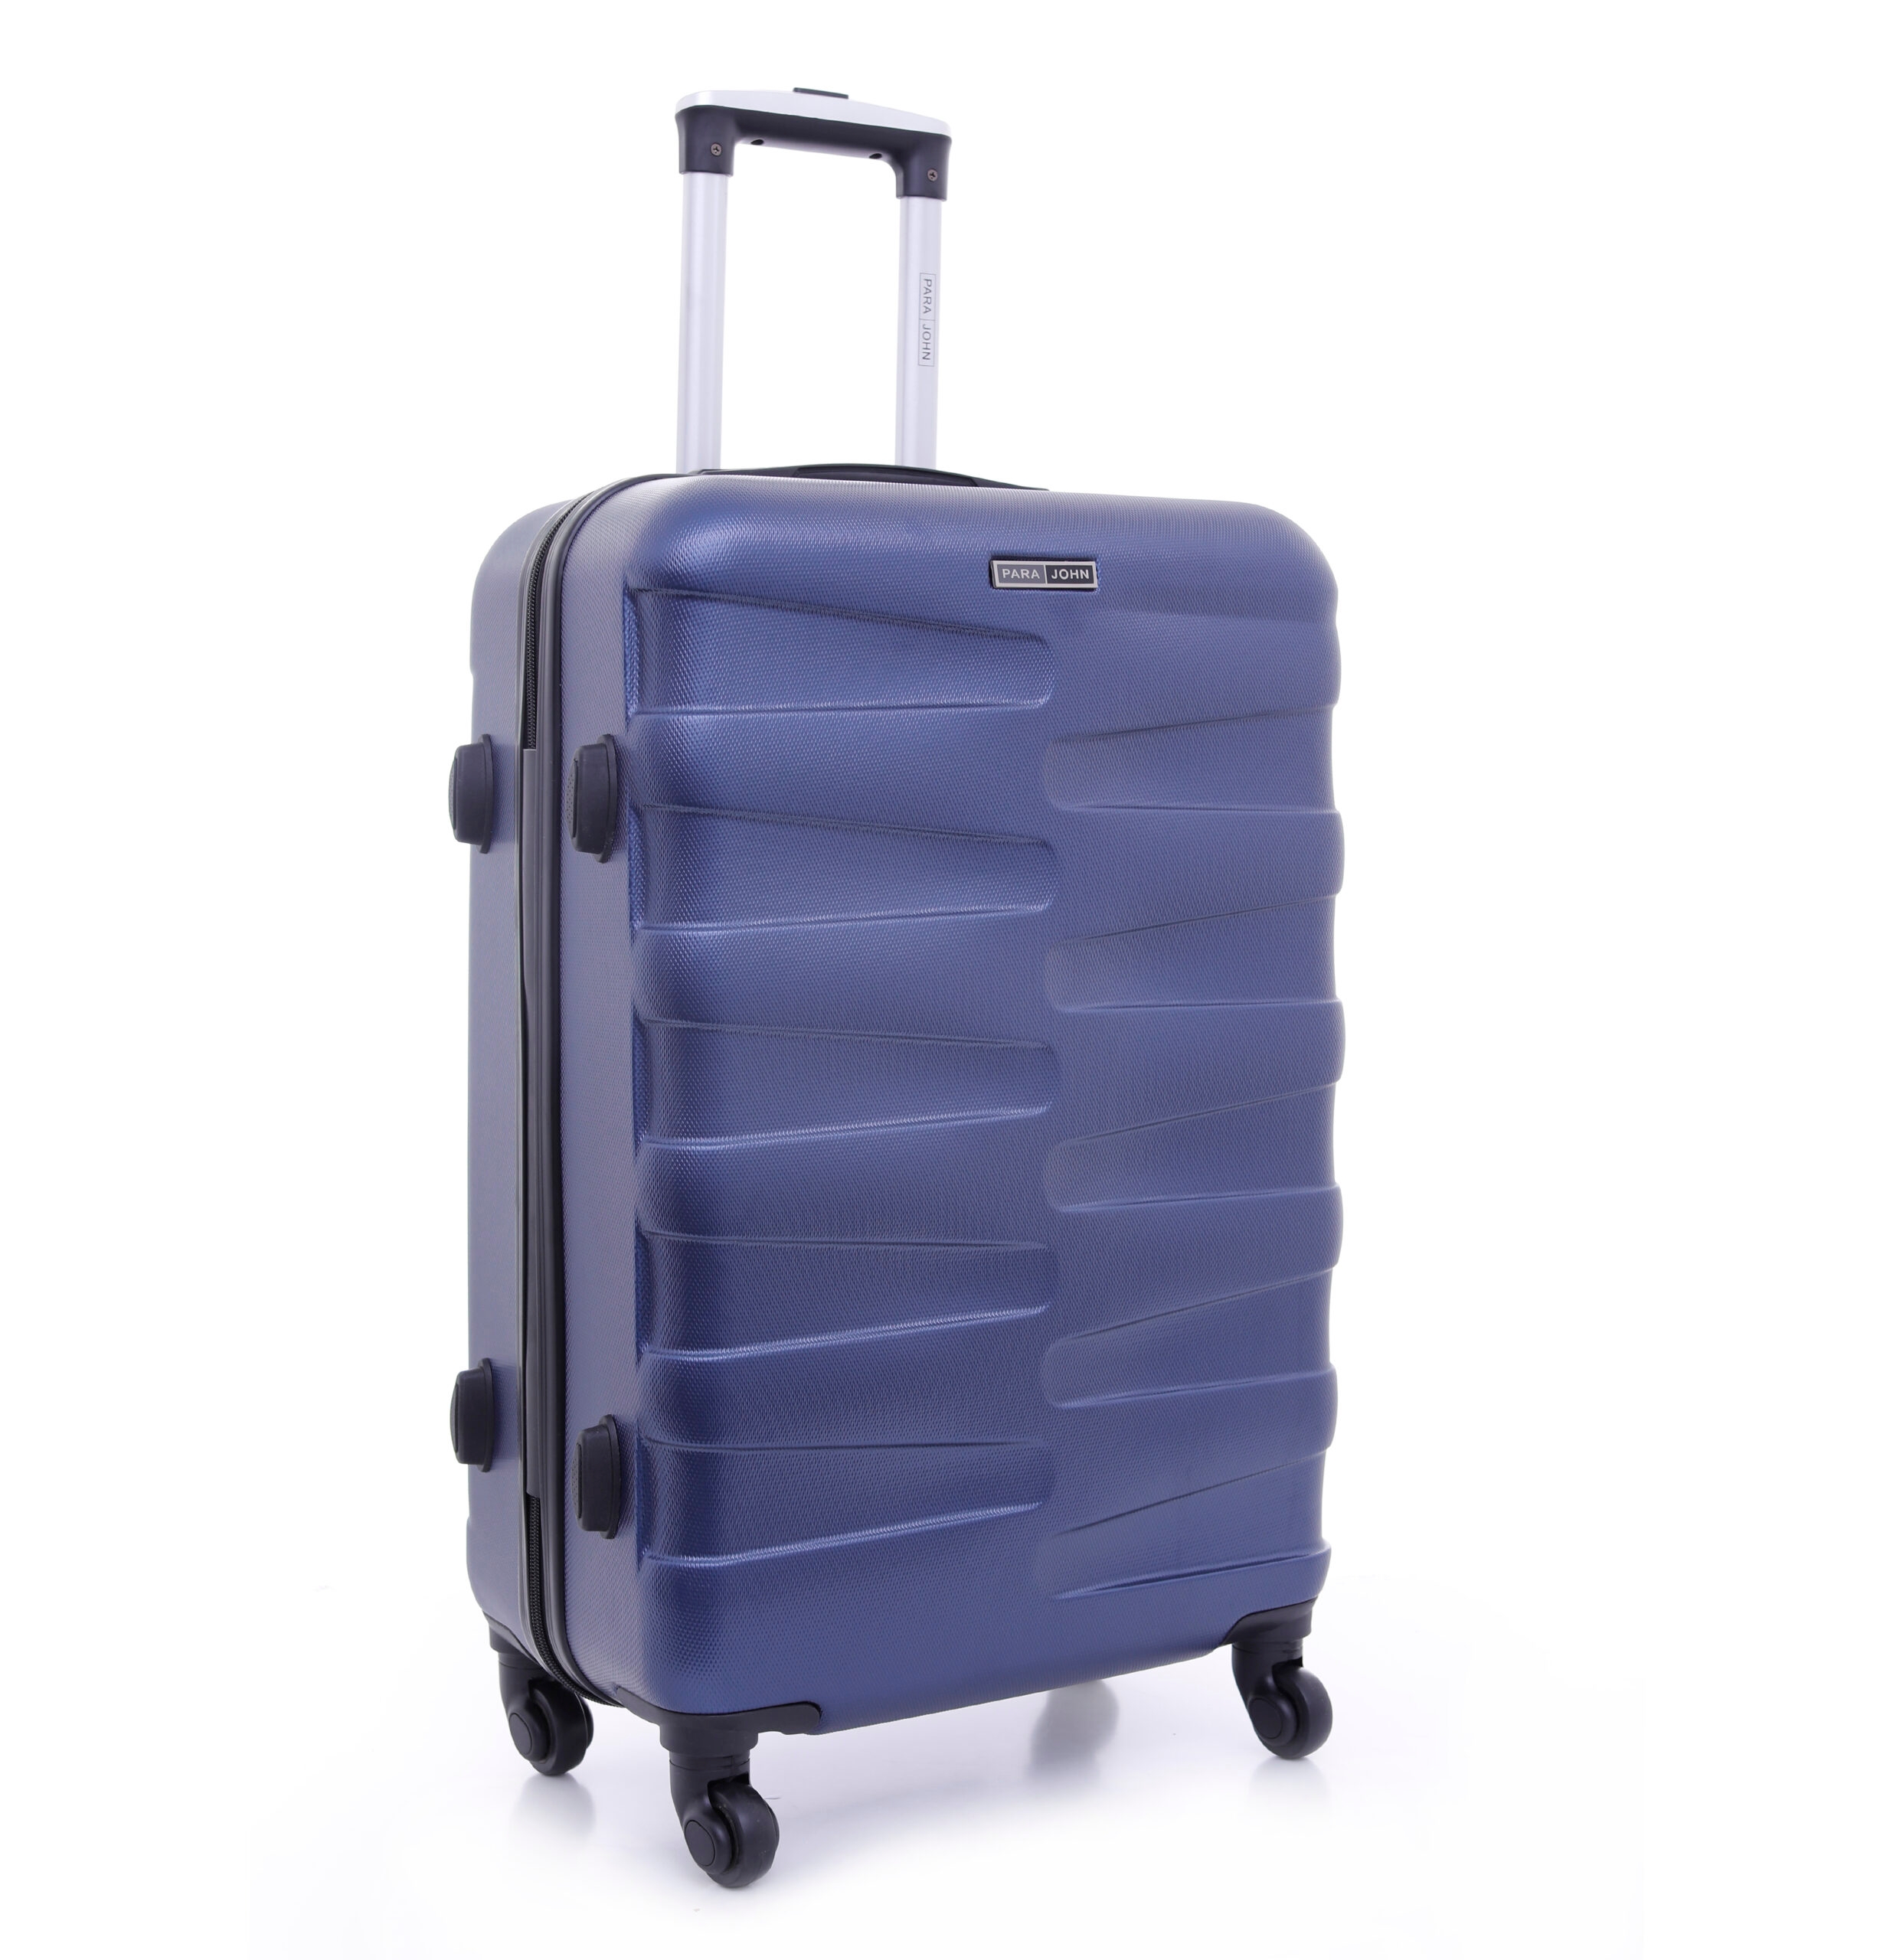 طقم حقائب سفر 3 حقائب مادة ABS بعجلات دوارة (20 ، 24 ، 28) بوصة أزرق داكن PARA JOHN - Travel Luggage Suitcase Set Of 3 - Trolley Bag, Carry On Hand Cabin Luggage Bag - Lightweight